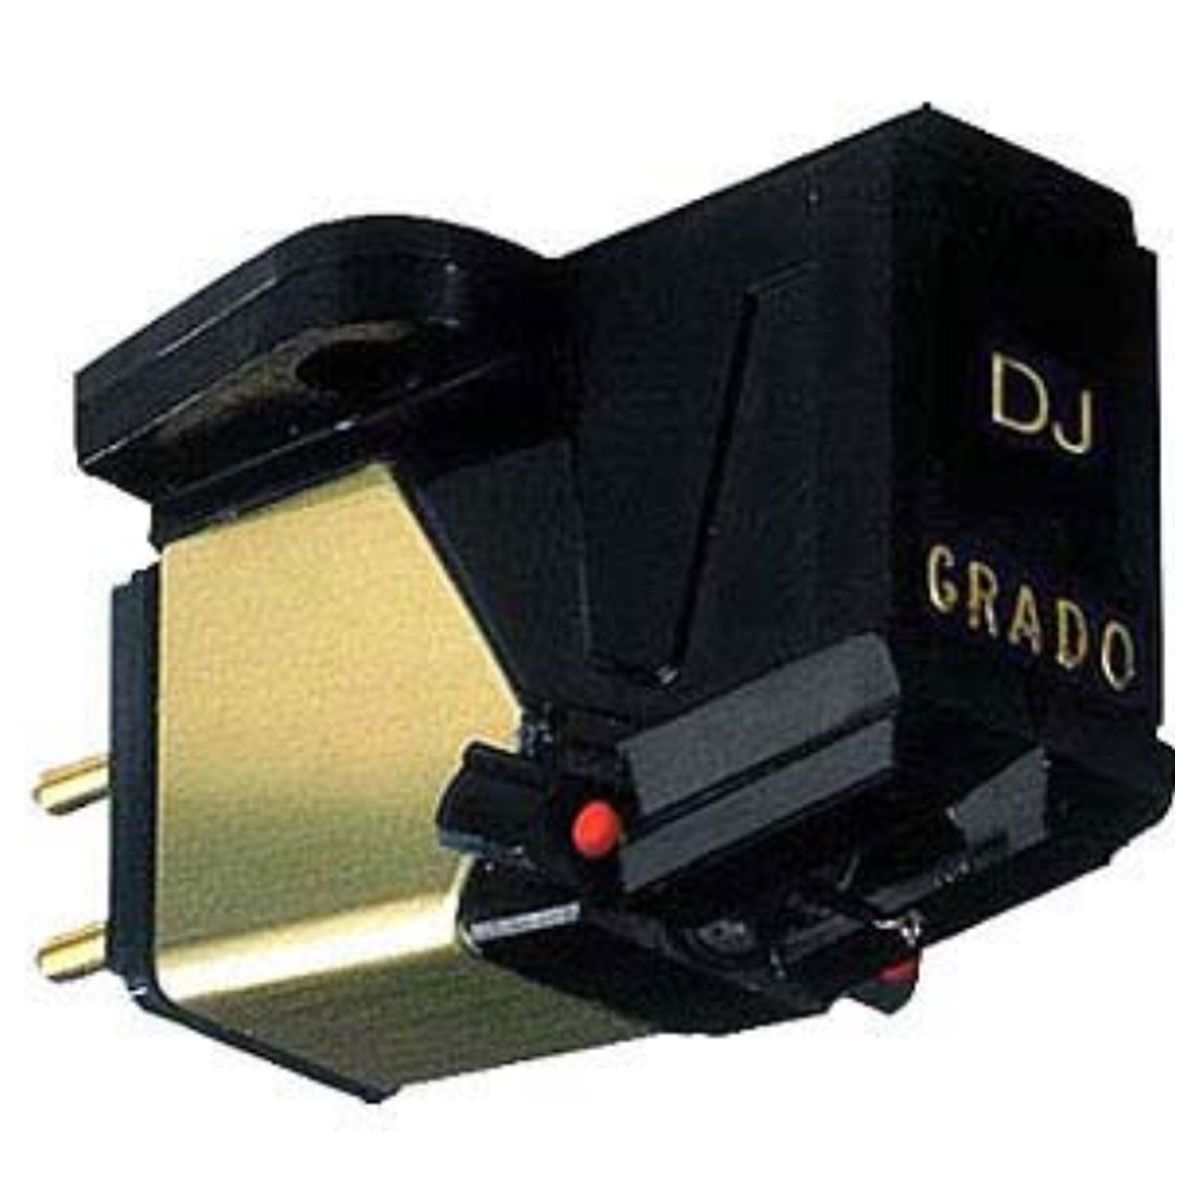 Grado Prestige DJ Phono Cartridge Model DJ100i, front view